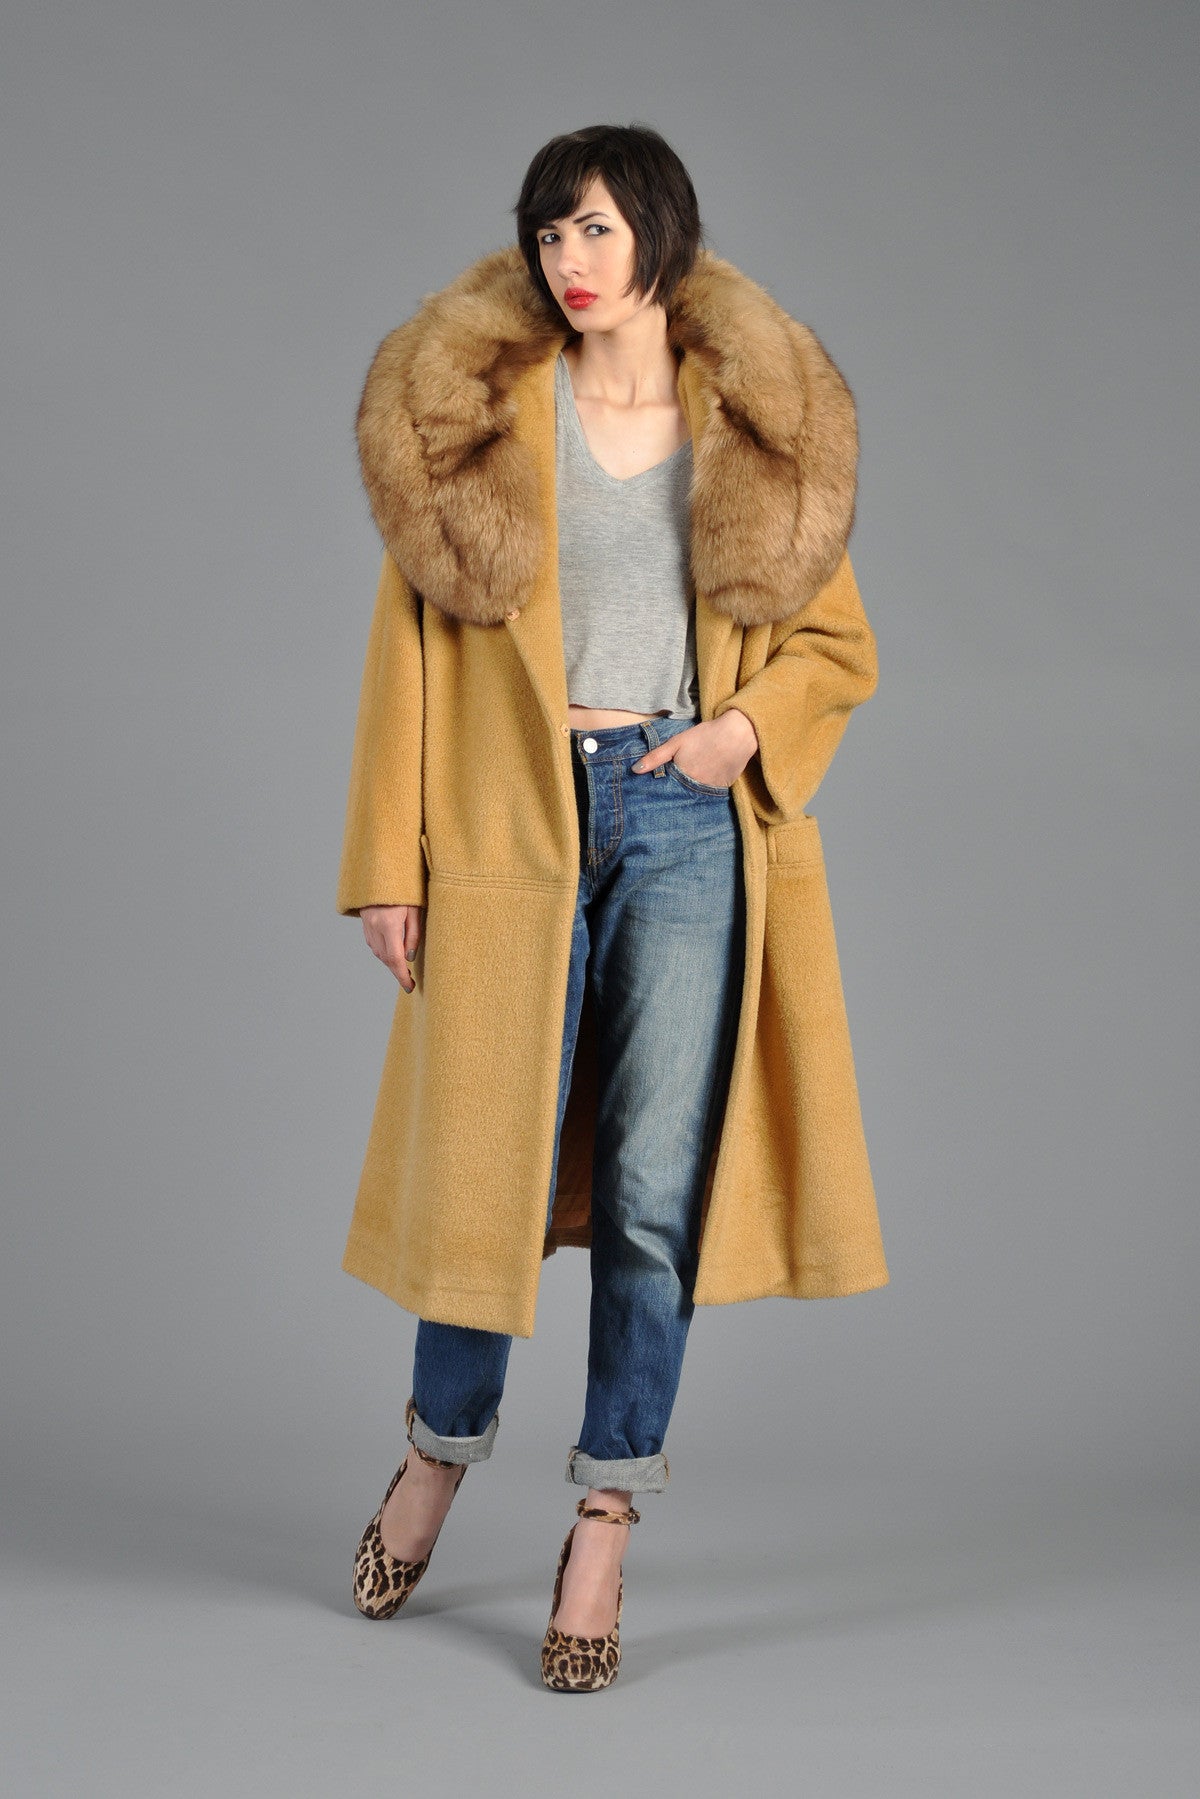 Lilli Ann 60s Massive Fox Fur Collar Coat